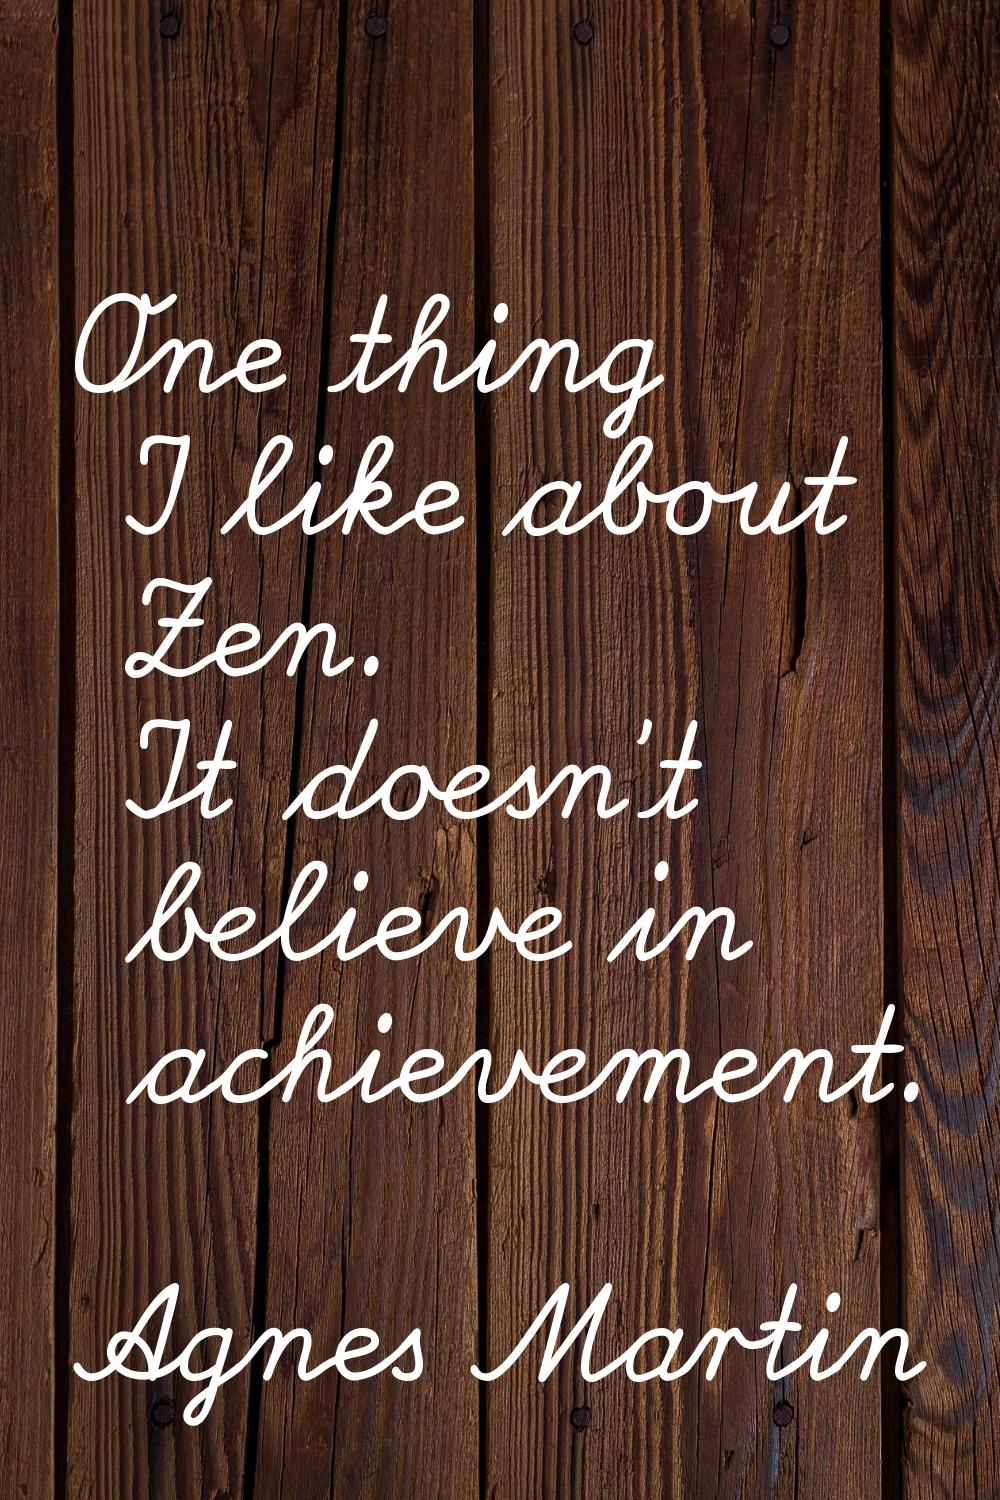 One thing I like about Zen. It doesn't believe in achievement.